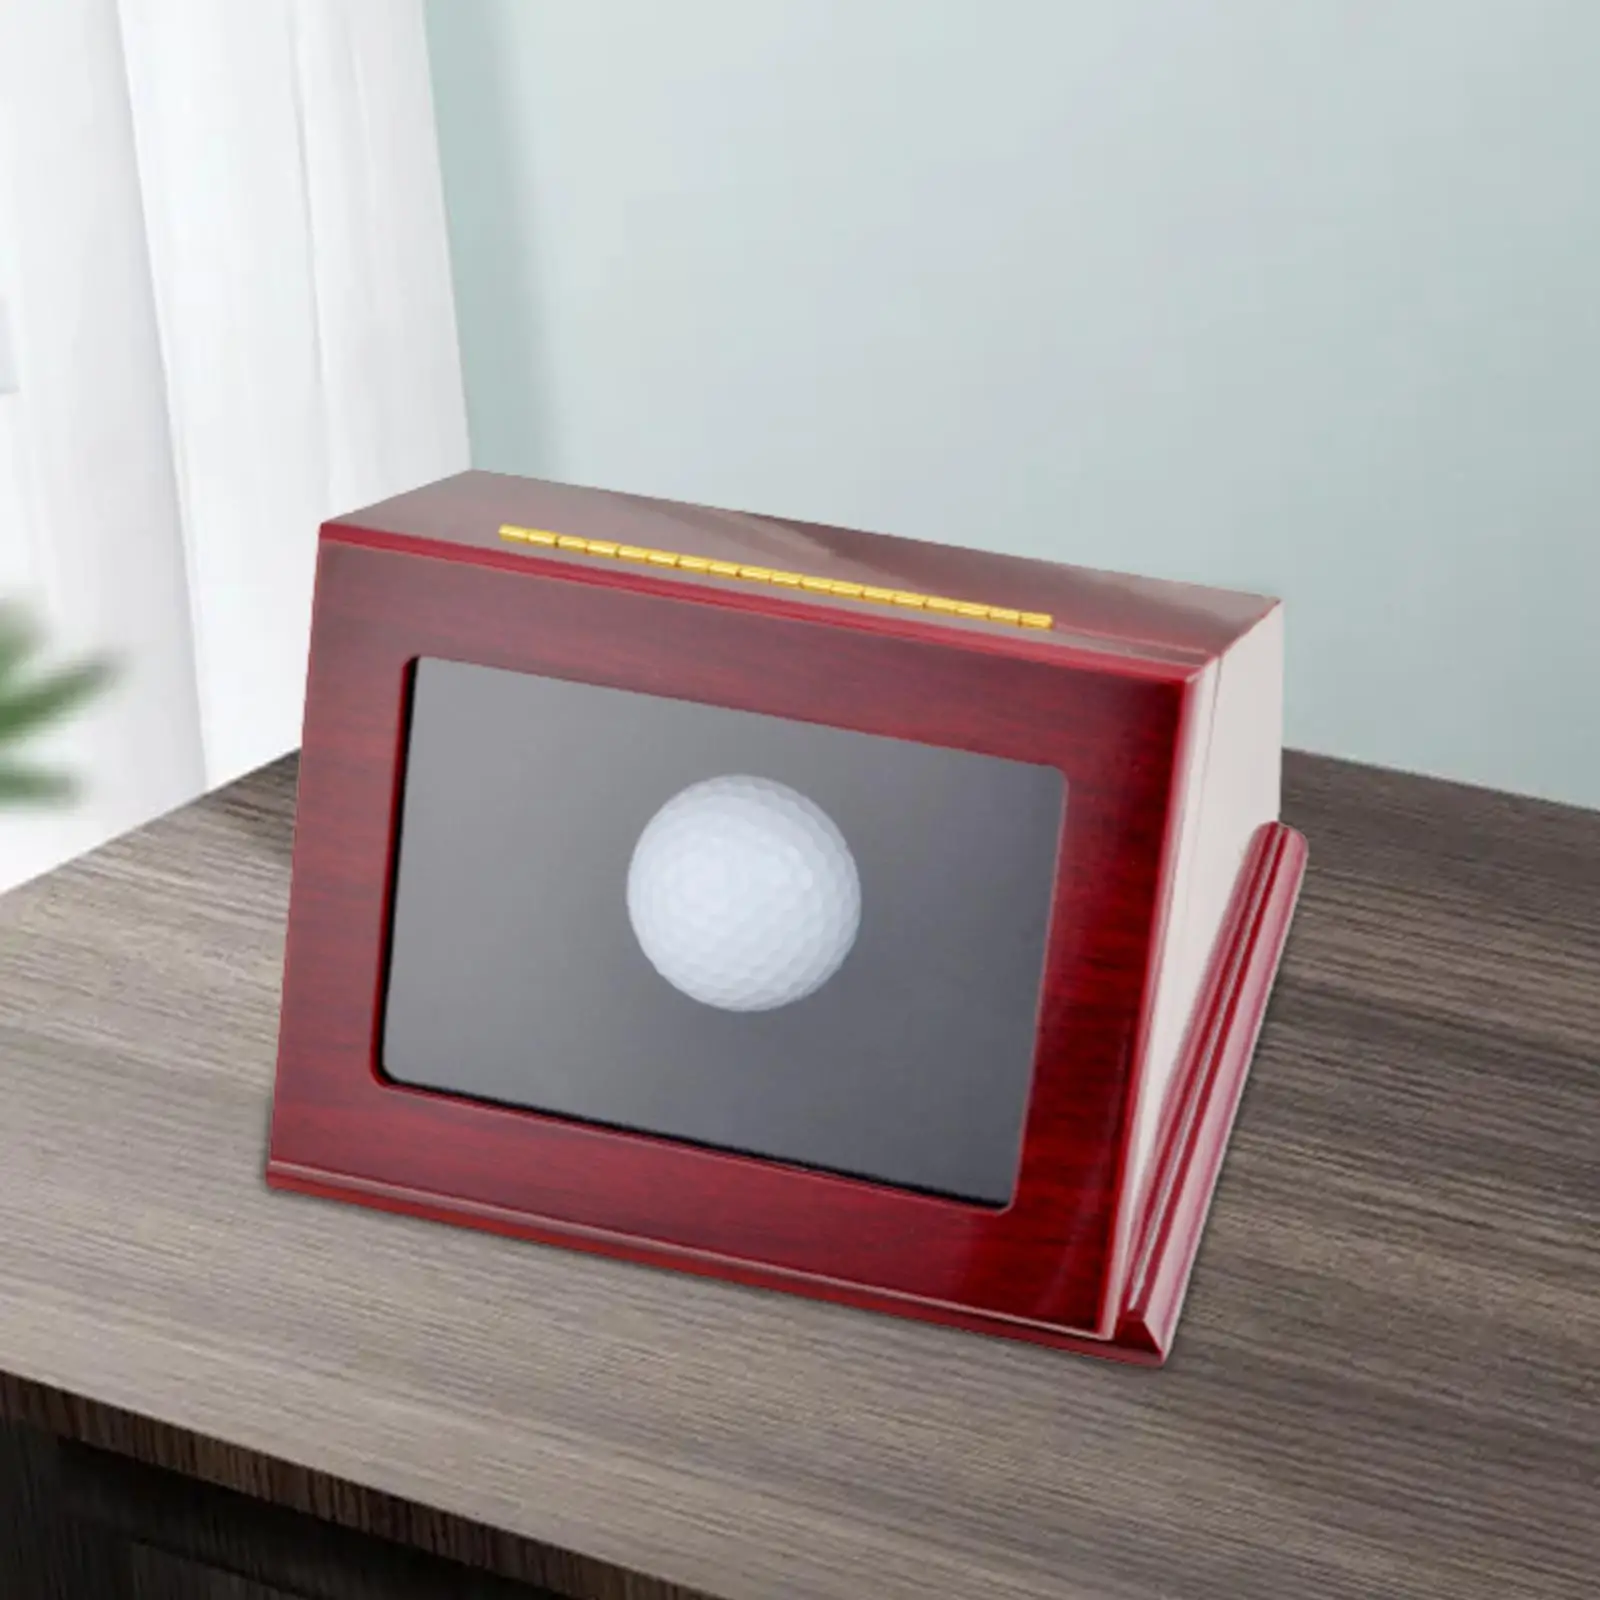 Golf Ball Display Case Dustproof Gift for Golfers Durable Wood Showcase Decorative Box Golf Ball Holder Golf Ball Organizer